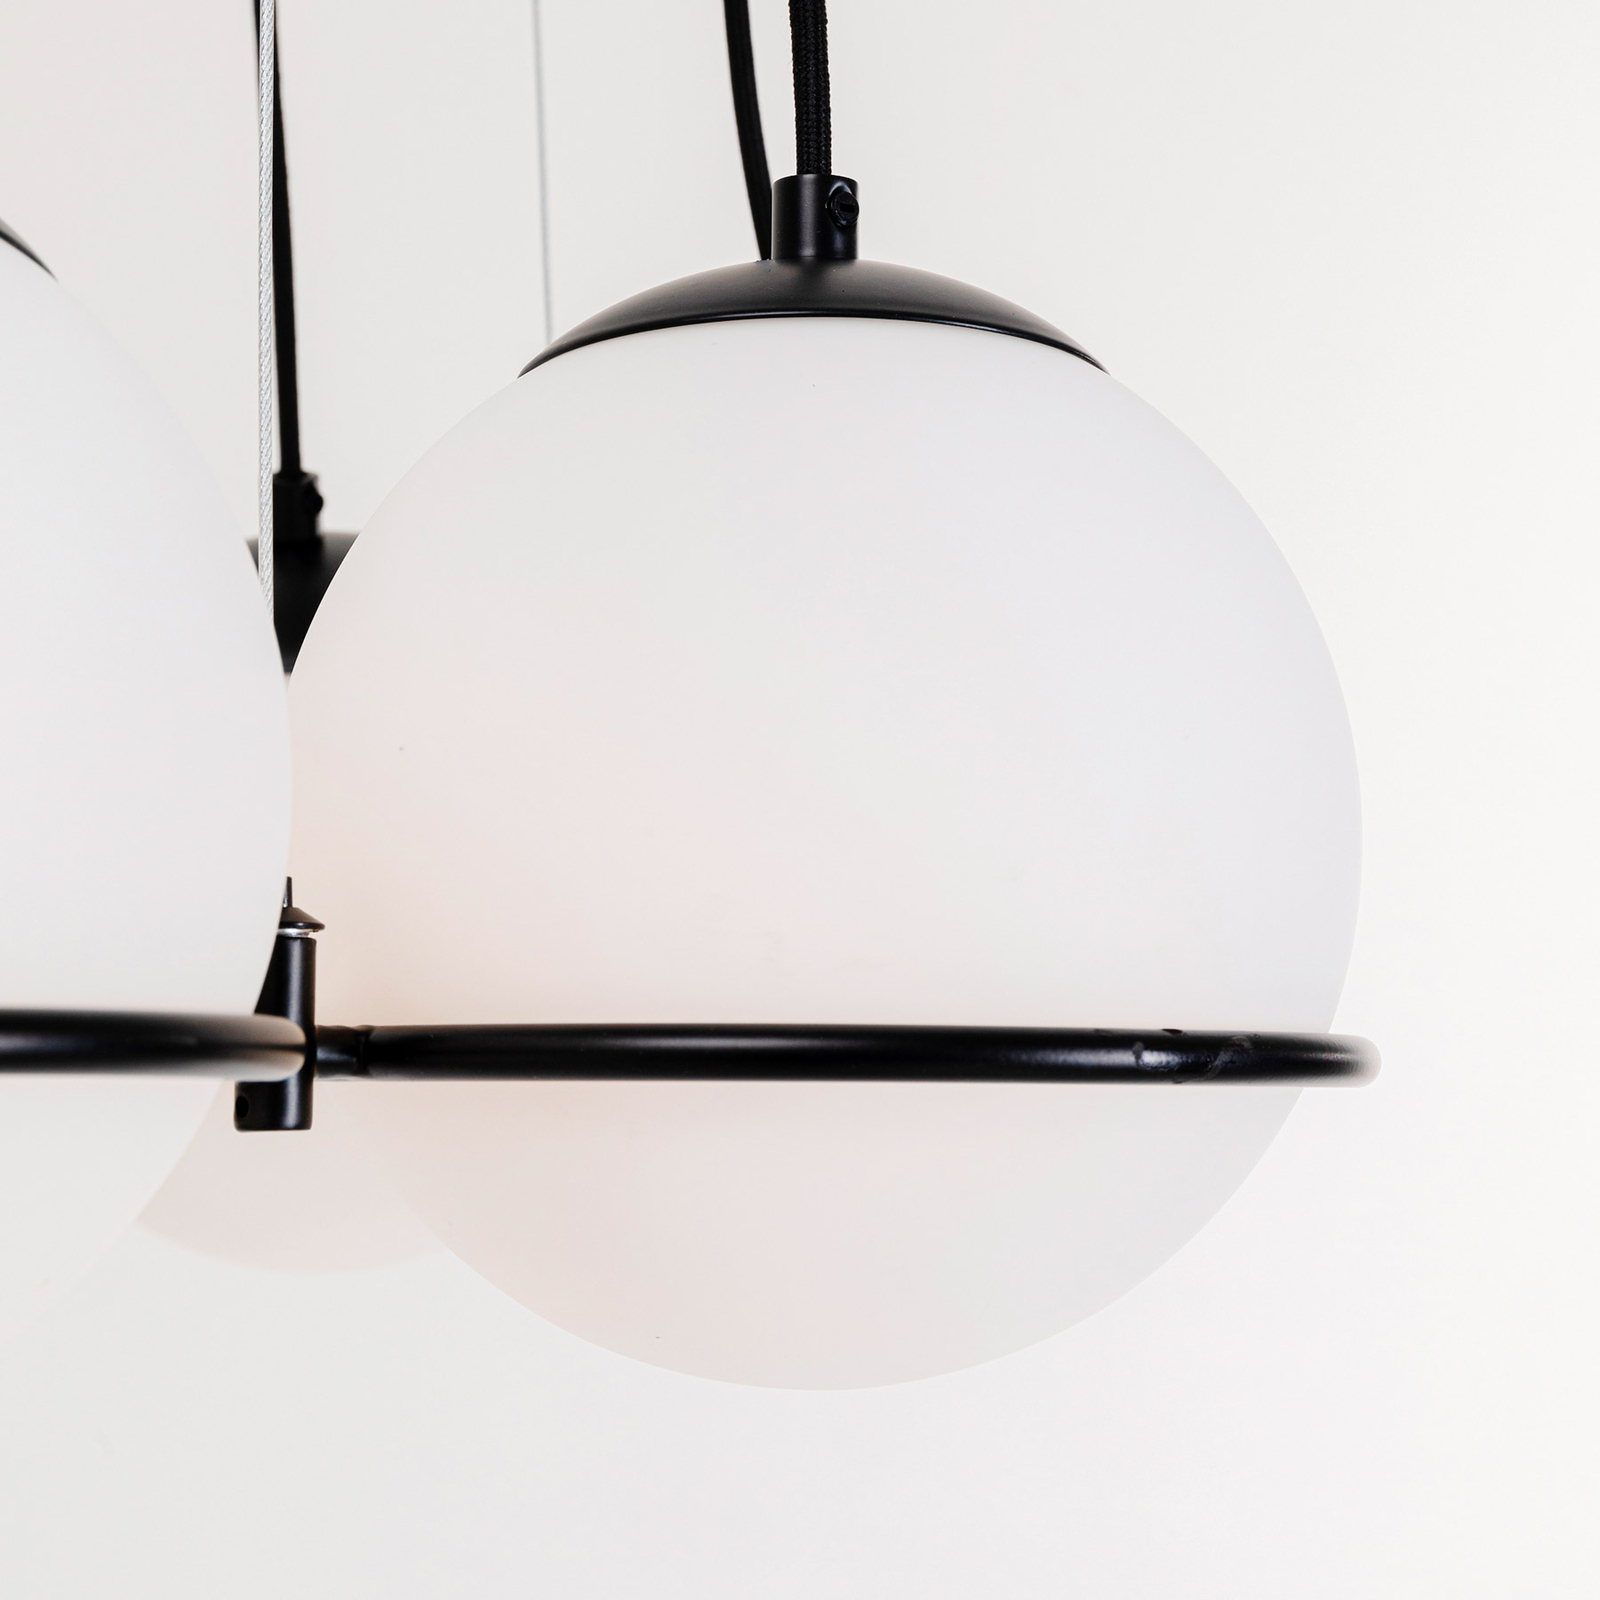 KARE Globes pendant light in white and black